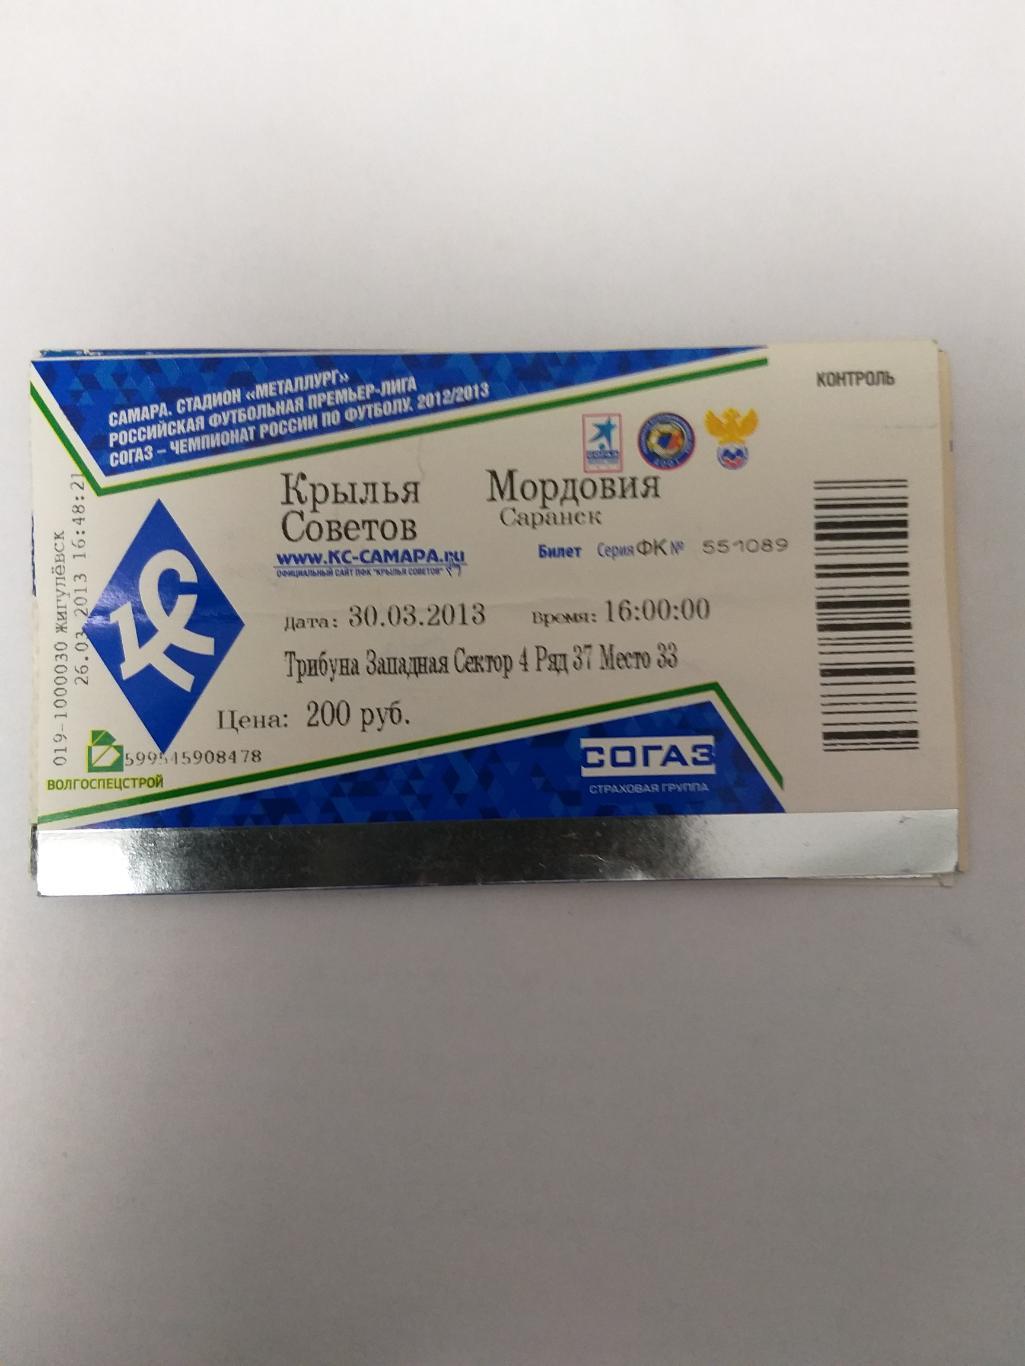 Крылья Советов(Самара)-Мордовия(Сар анск) 2013 билет